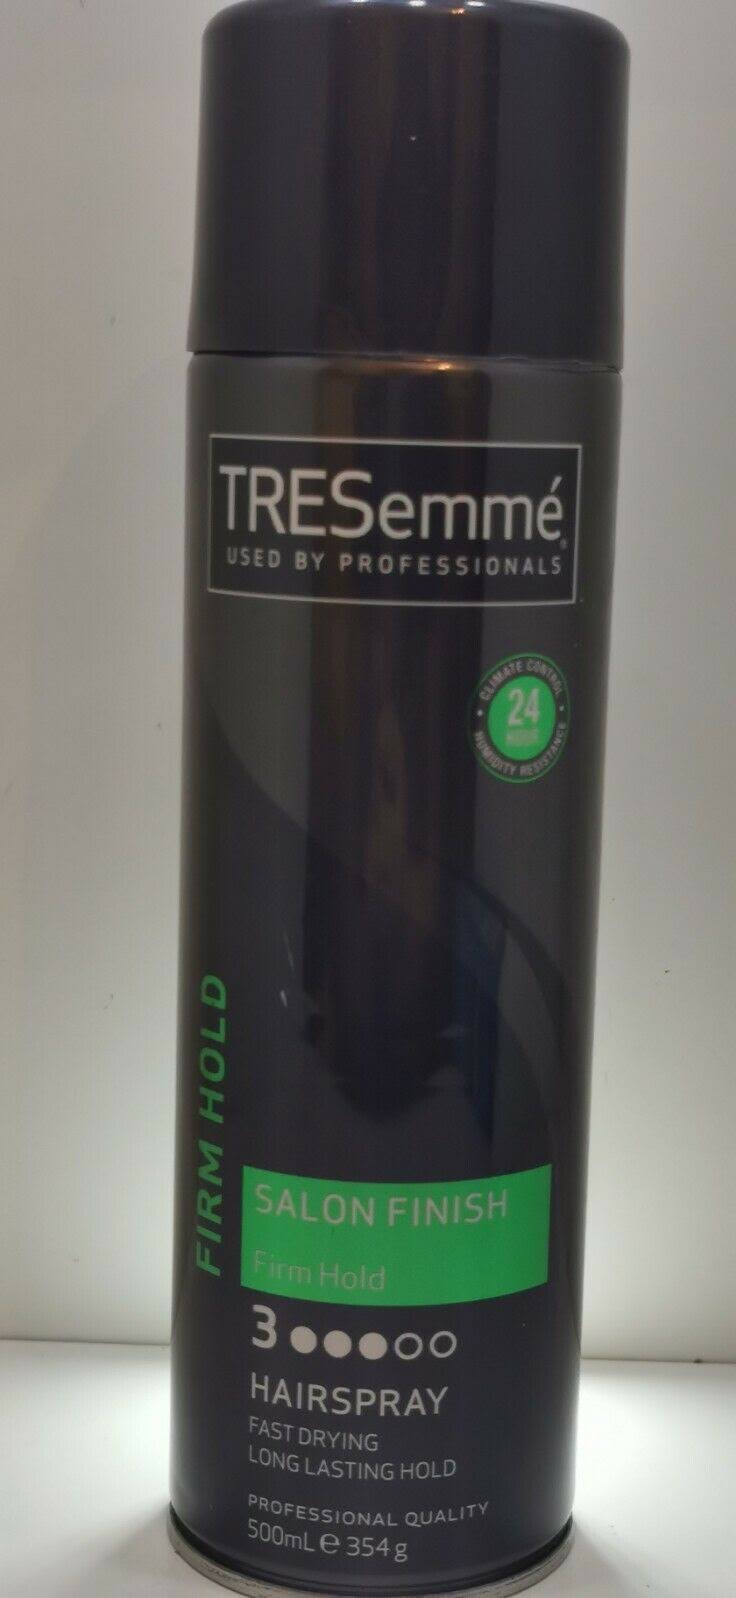 TRESemmé Salon Finish Hairspray - Firm Hold, 500ml